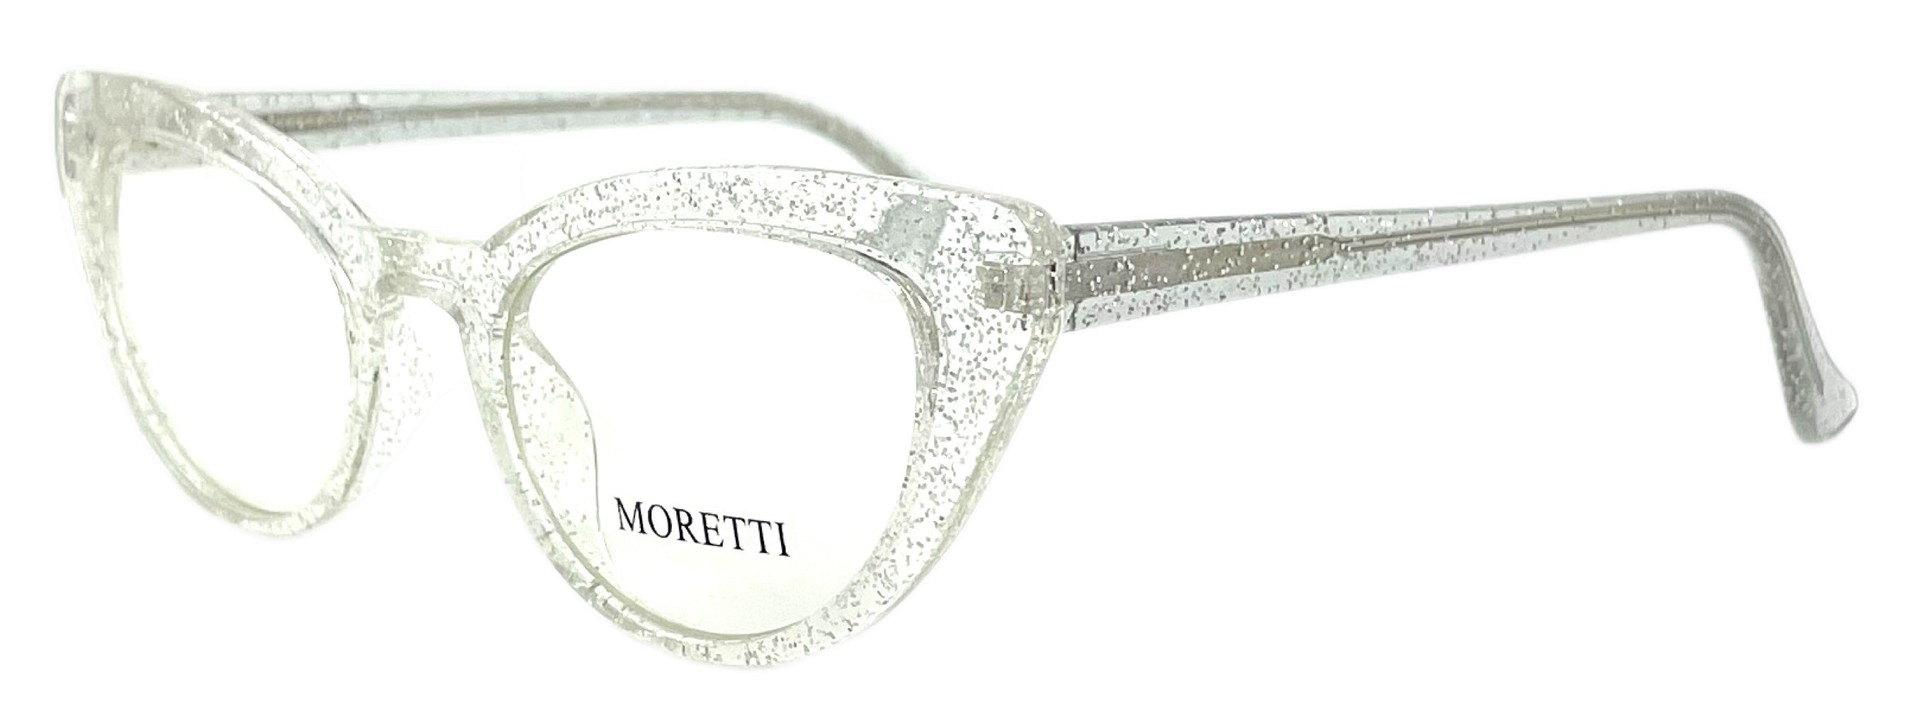 Moretti 2012 C3 2